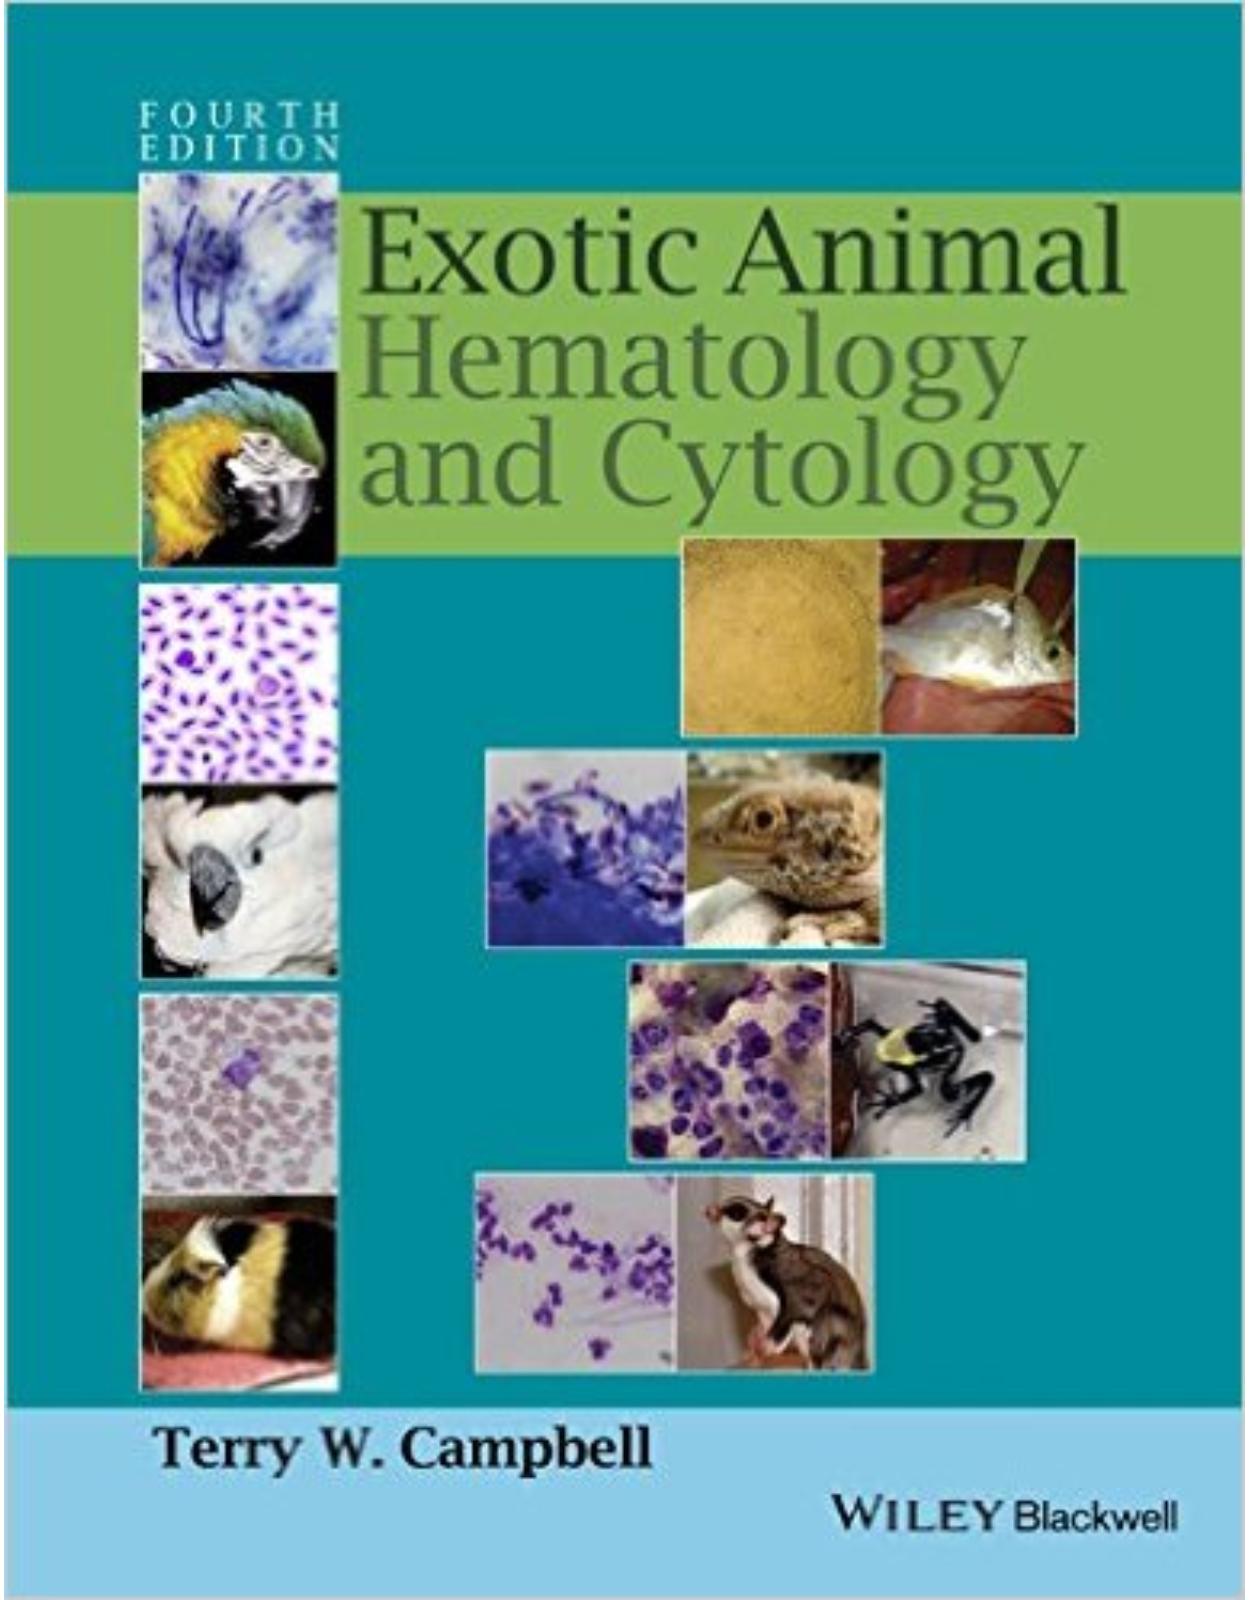 Exotic Animal Hematology and Cytology 4th Edition